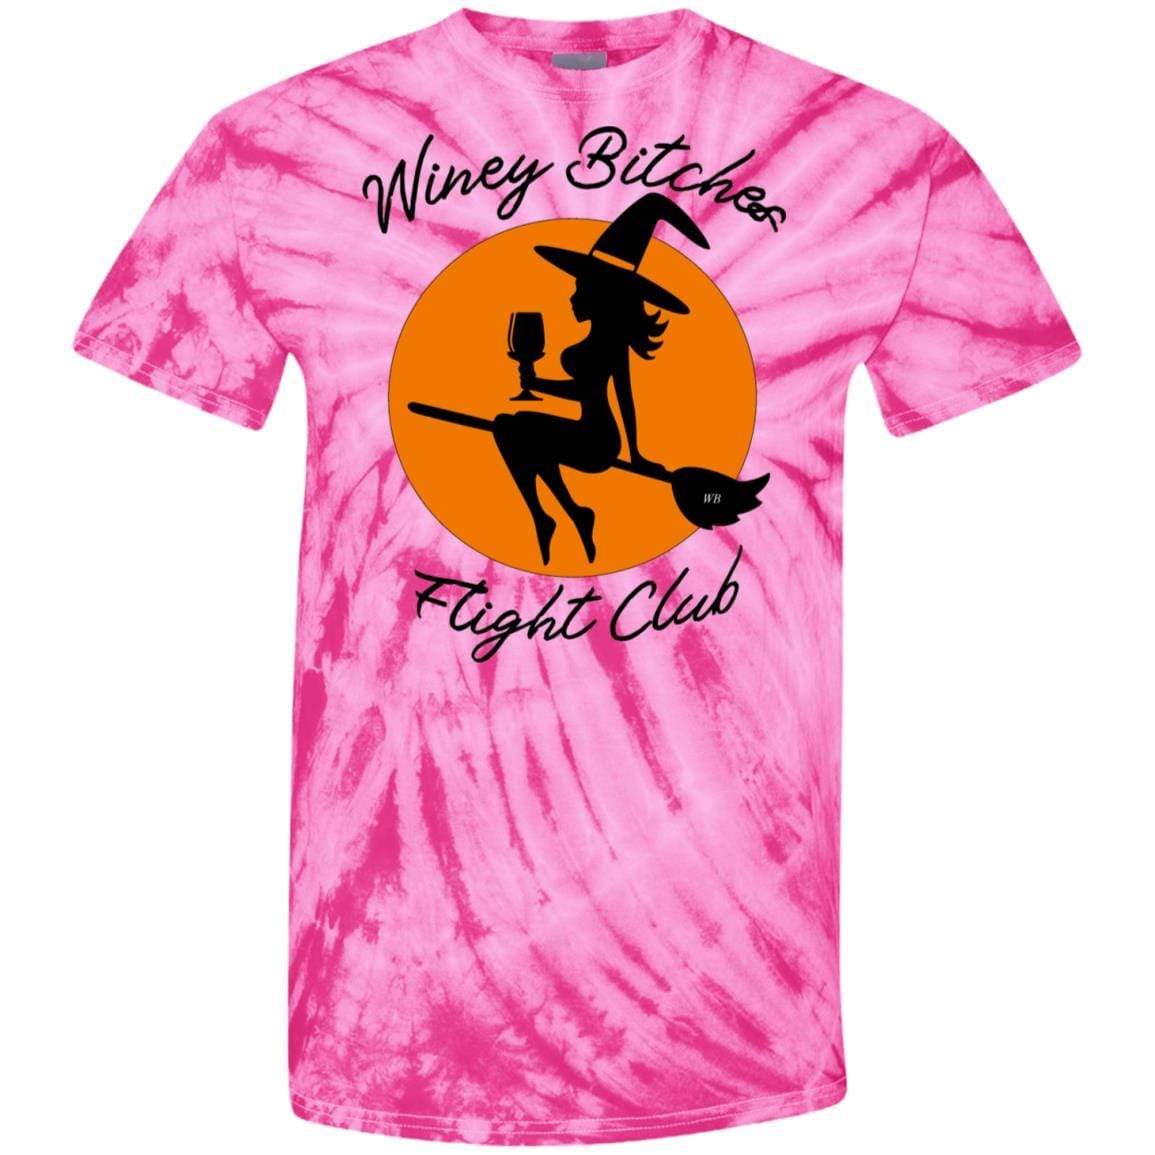 T-Shirts SpiderPink / S WineyBitches.Co "Winey Bitches Flight Club" 100% Cotton Tie Dye T-Shirt WineyBitchesCo